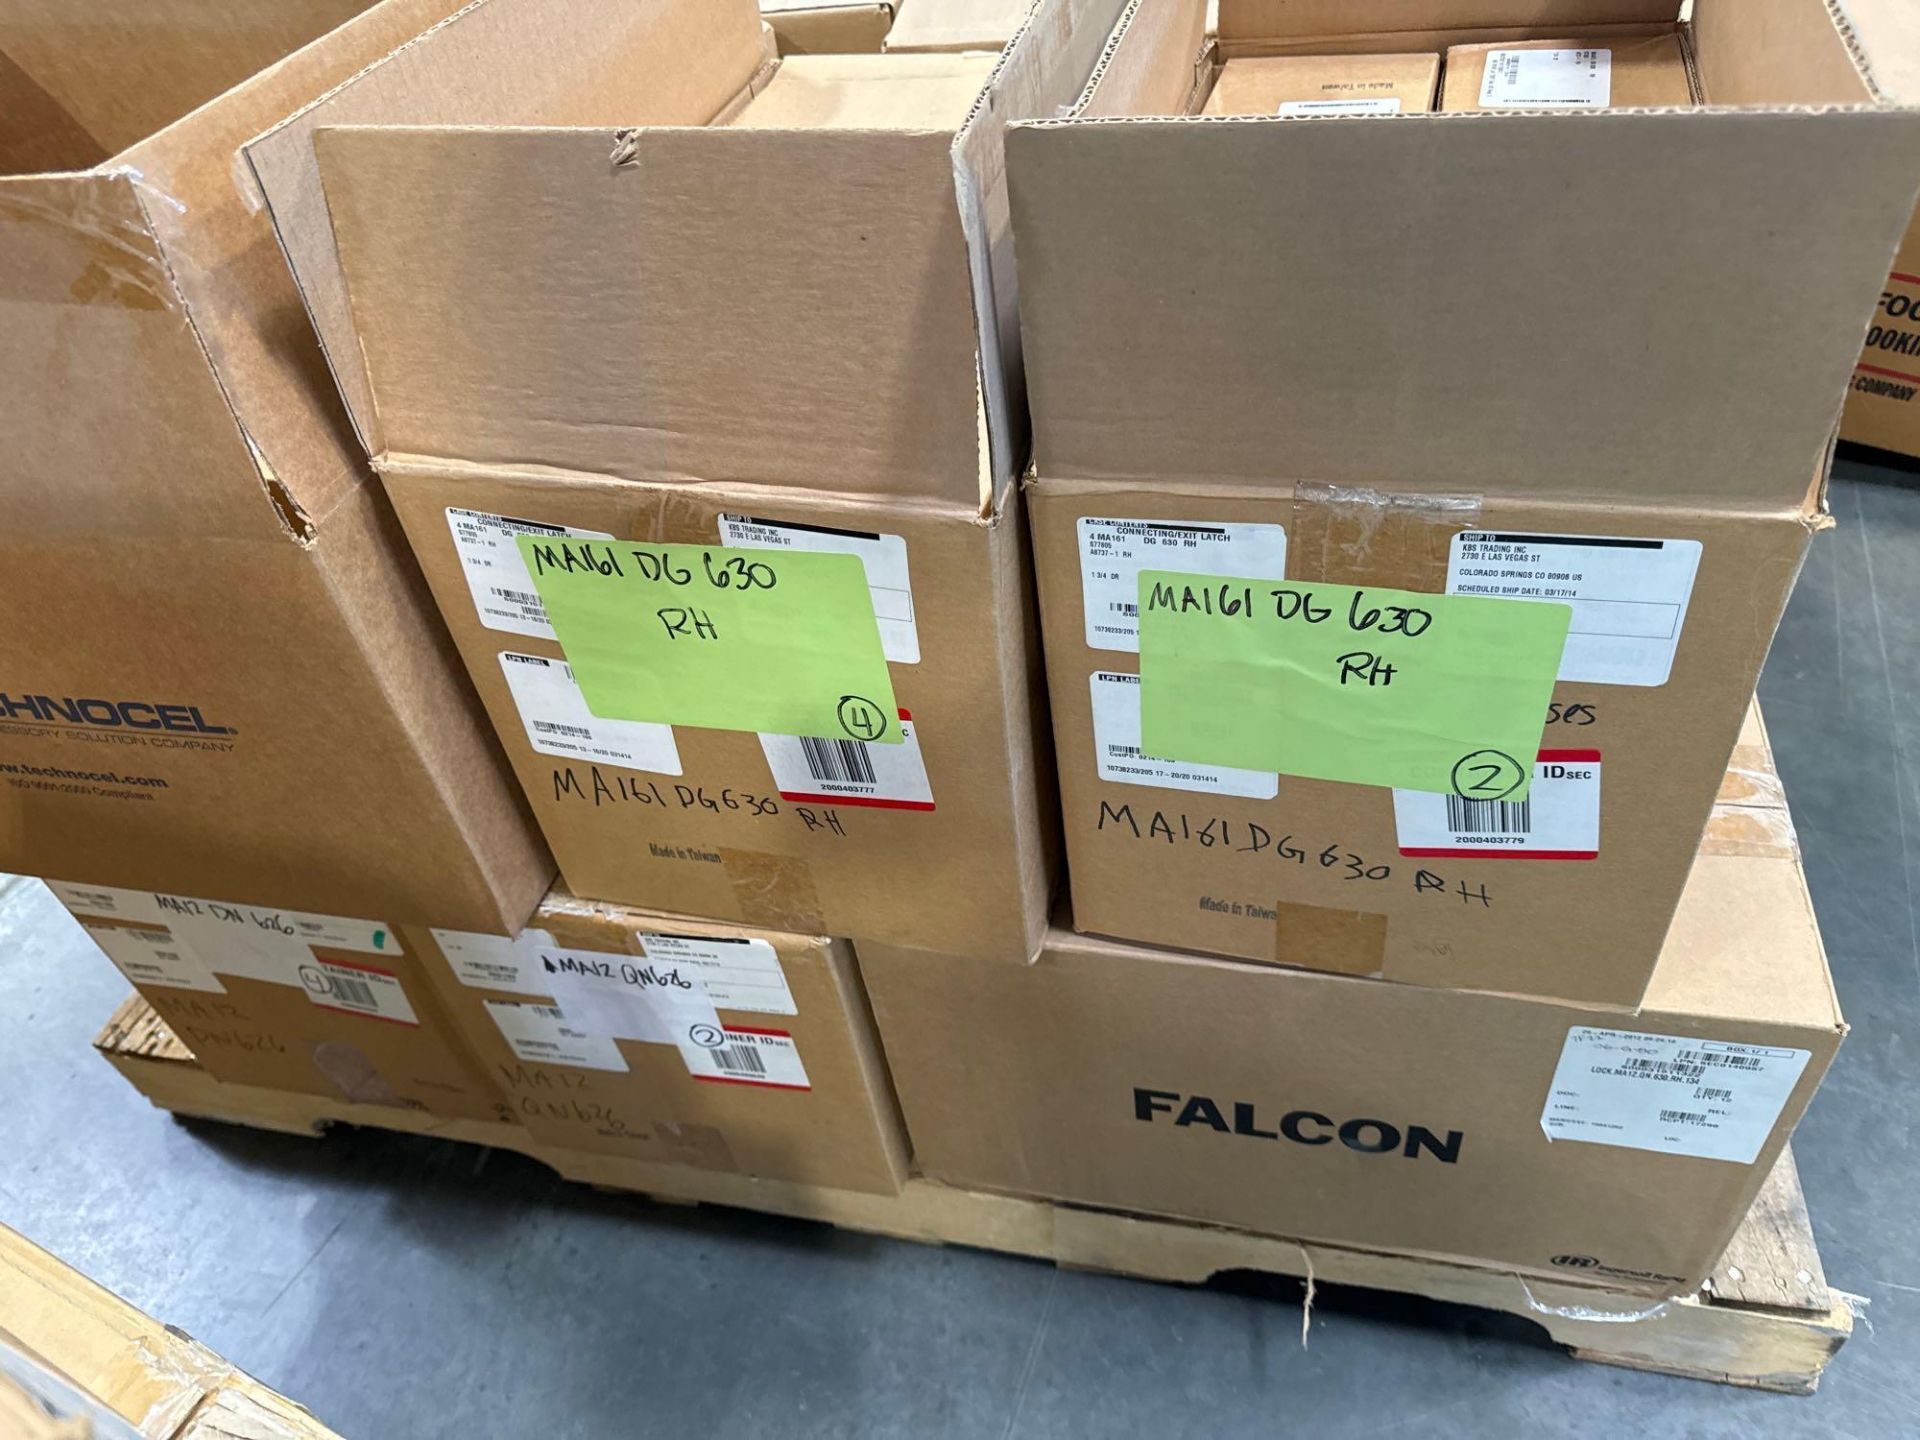 Falcon MA44IL security Locks, MA161D6, and more - Image 6 of 7